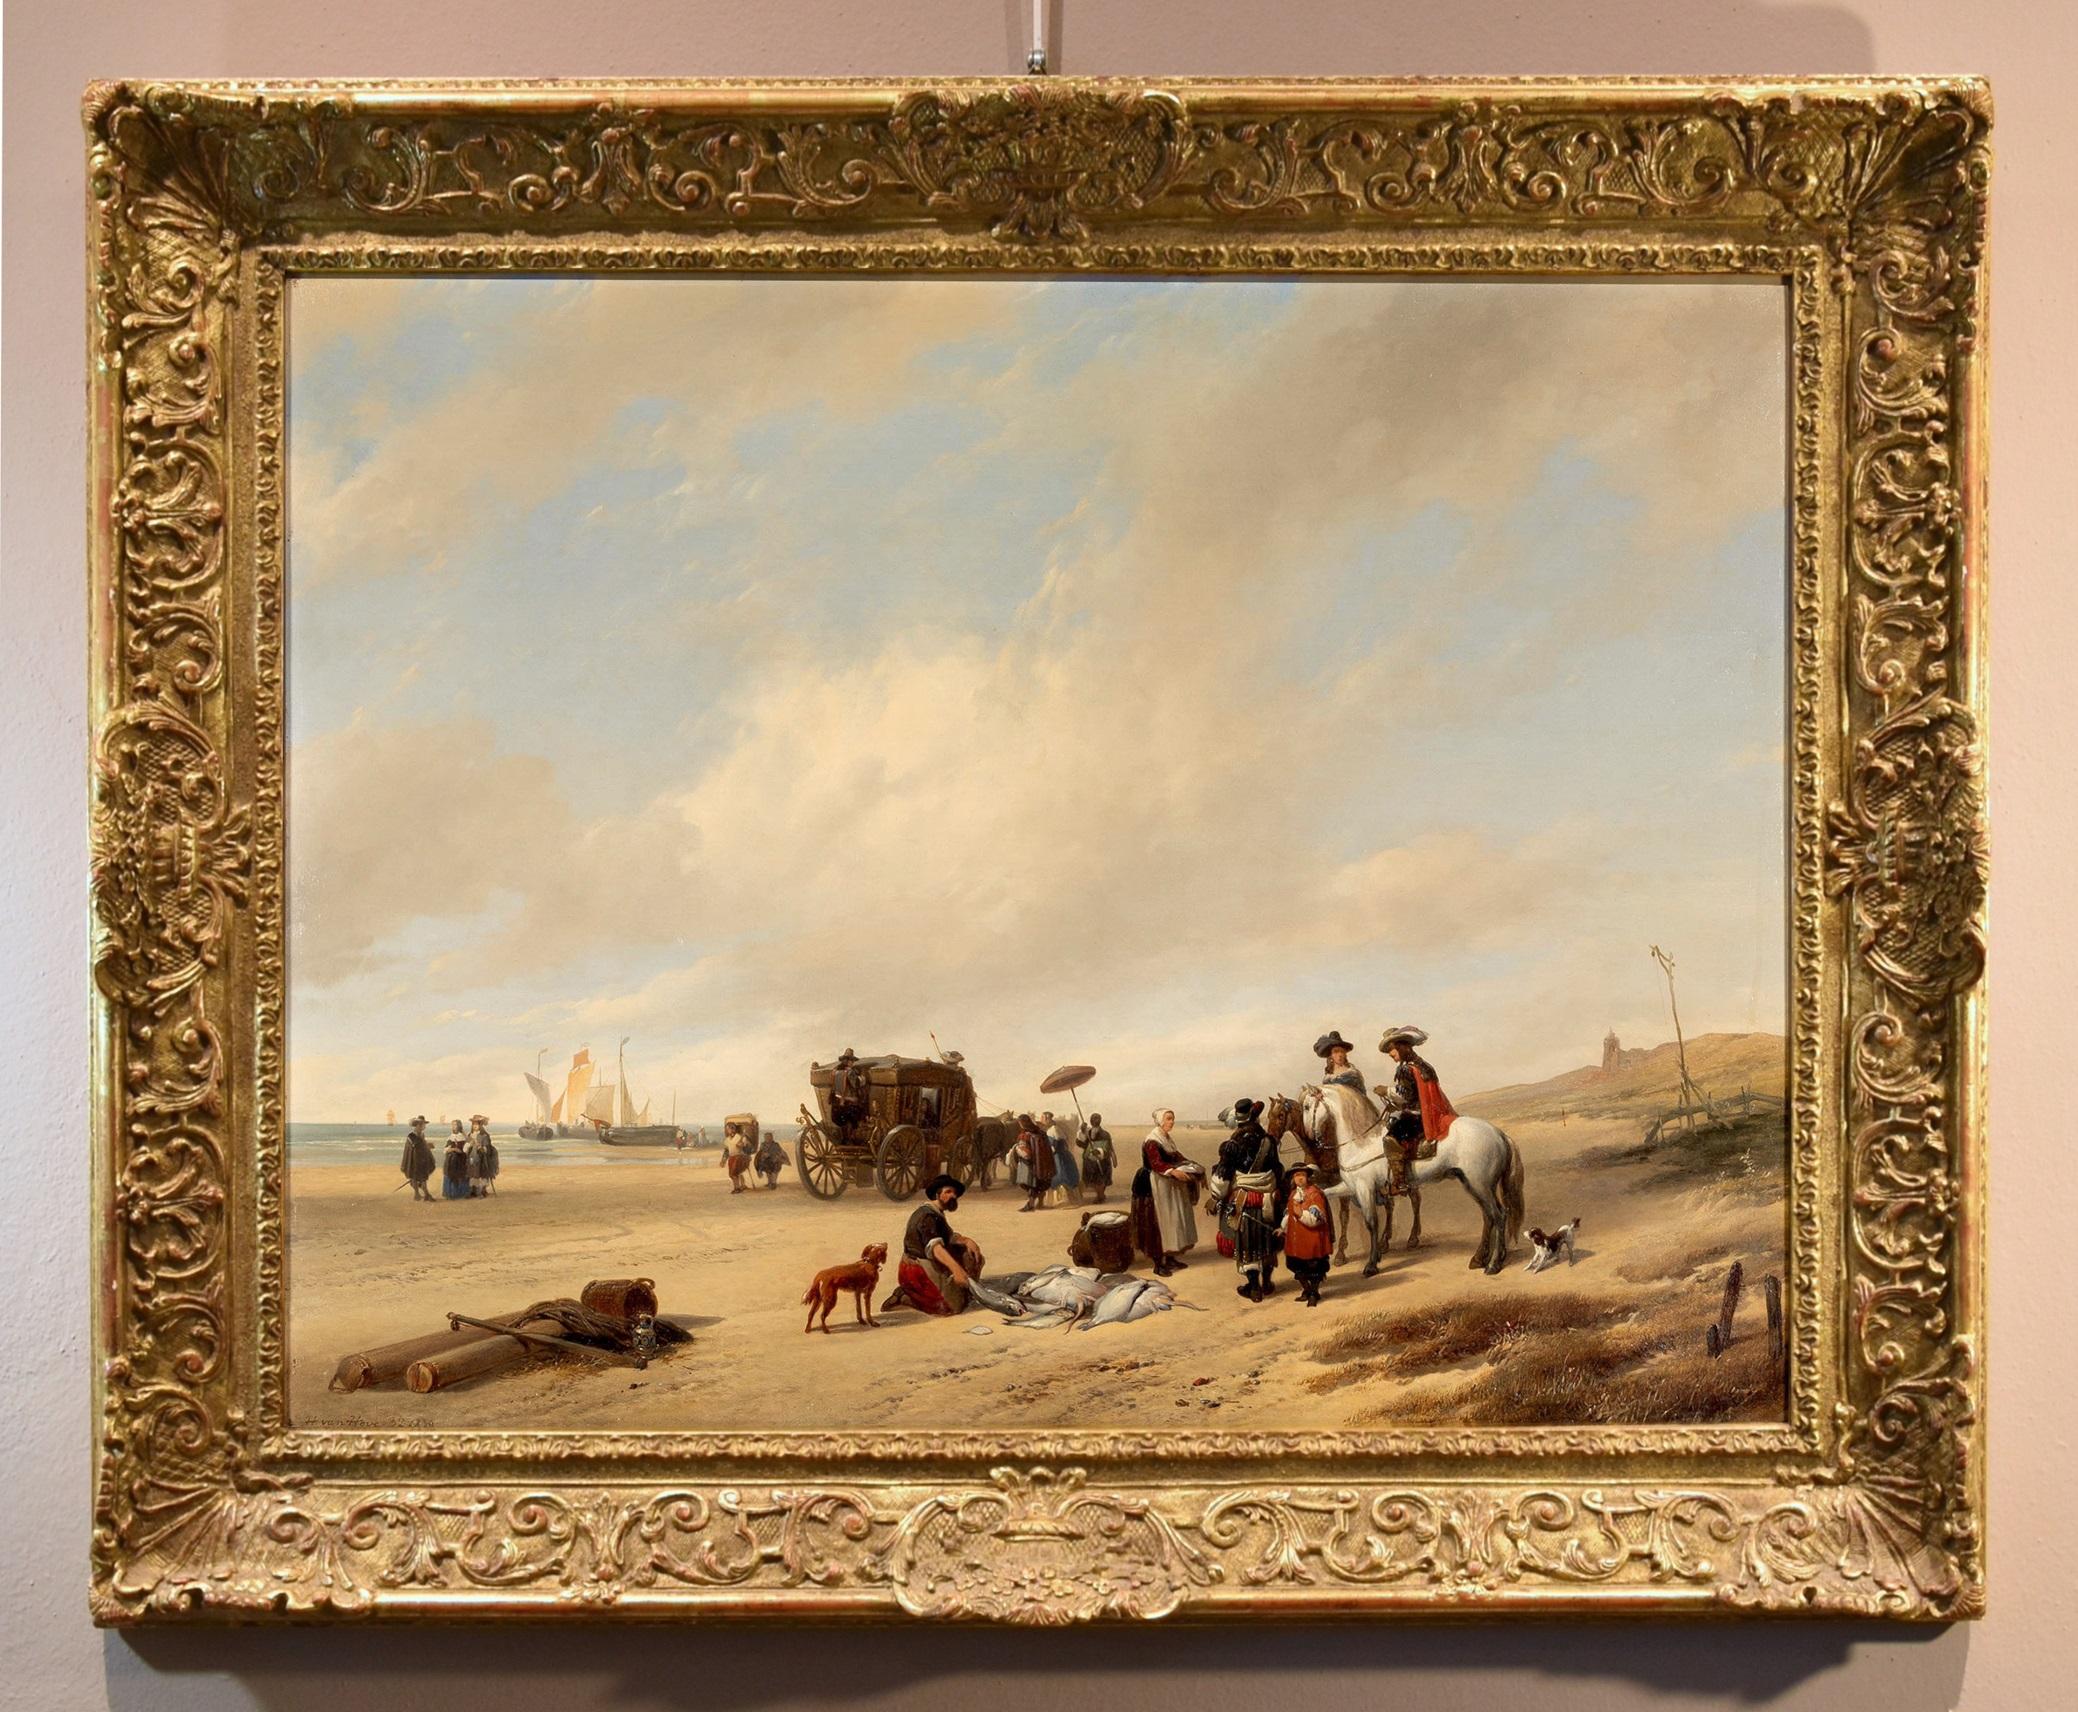 Hubertus Van Hove (the Hague, 1814 - Antwerp, 1865) Landscape Painting - Beach See Water Hubertus Van Hove Signed Paint Oil on table 19th Century Flemish